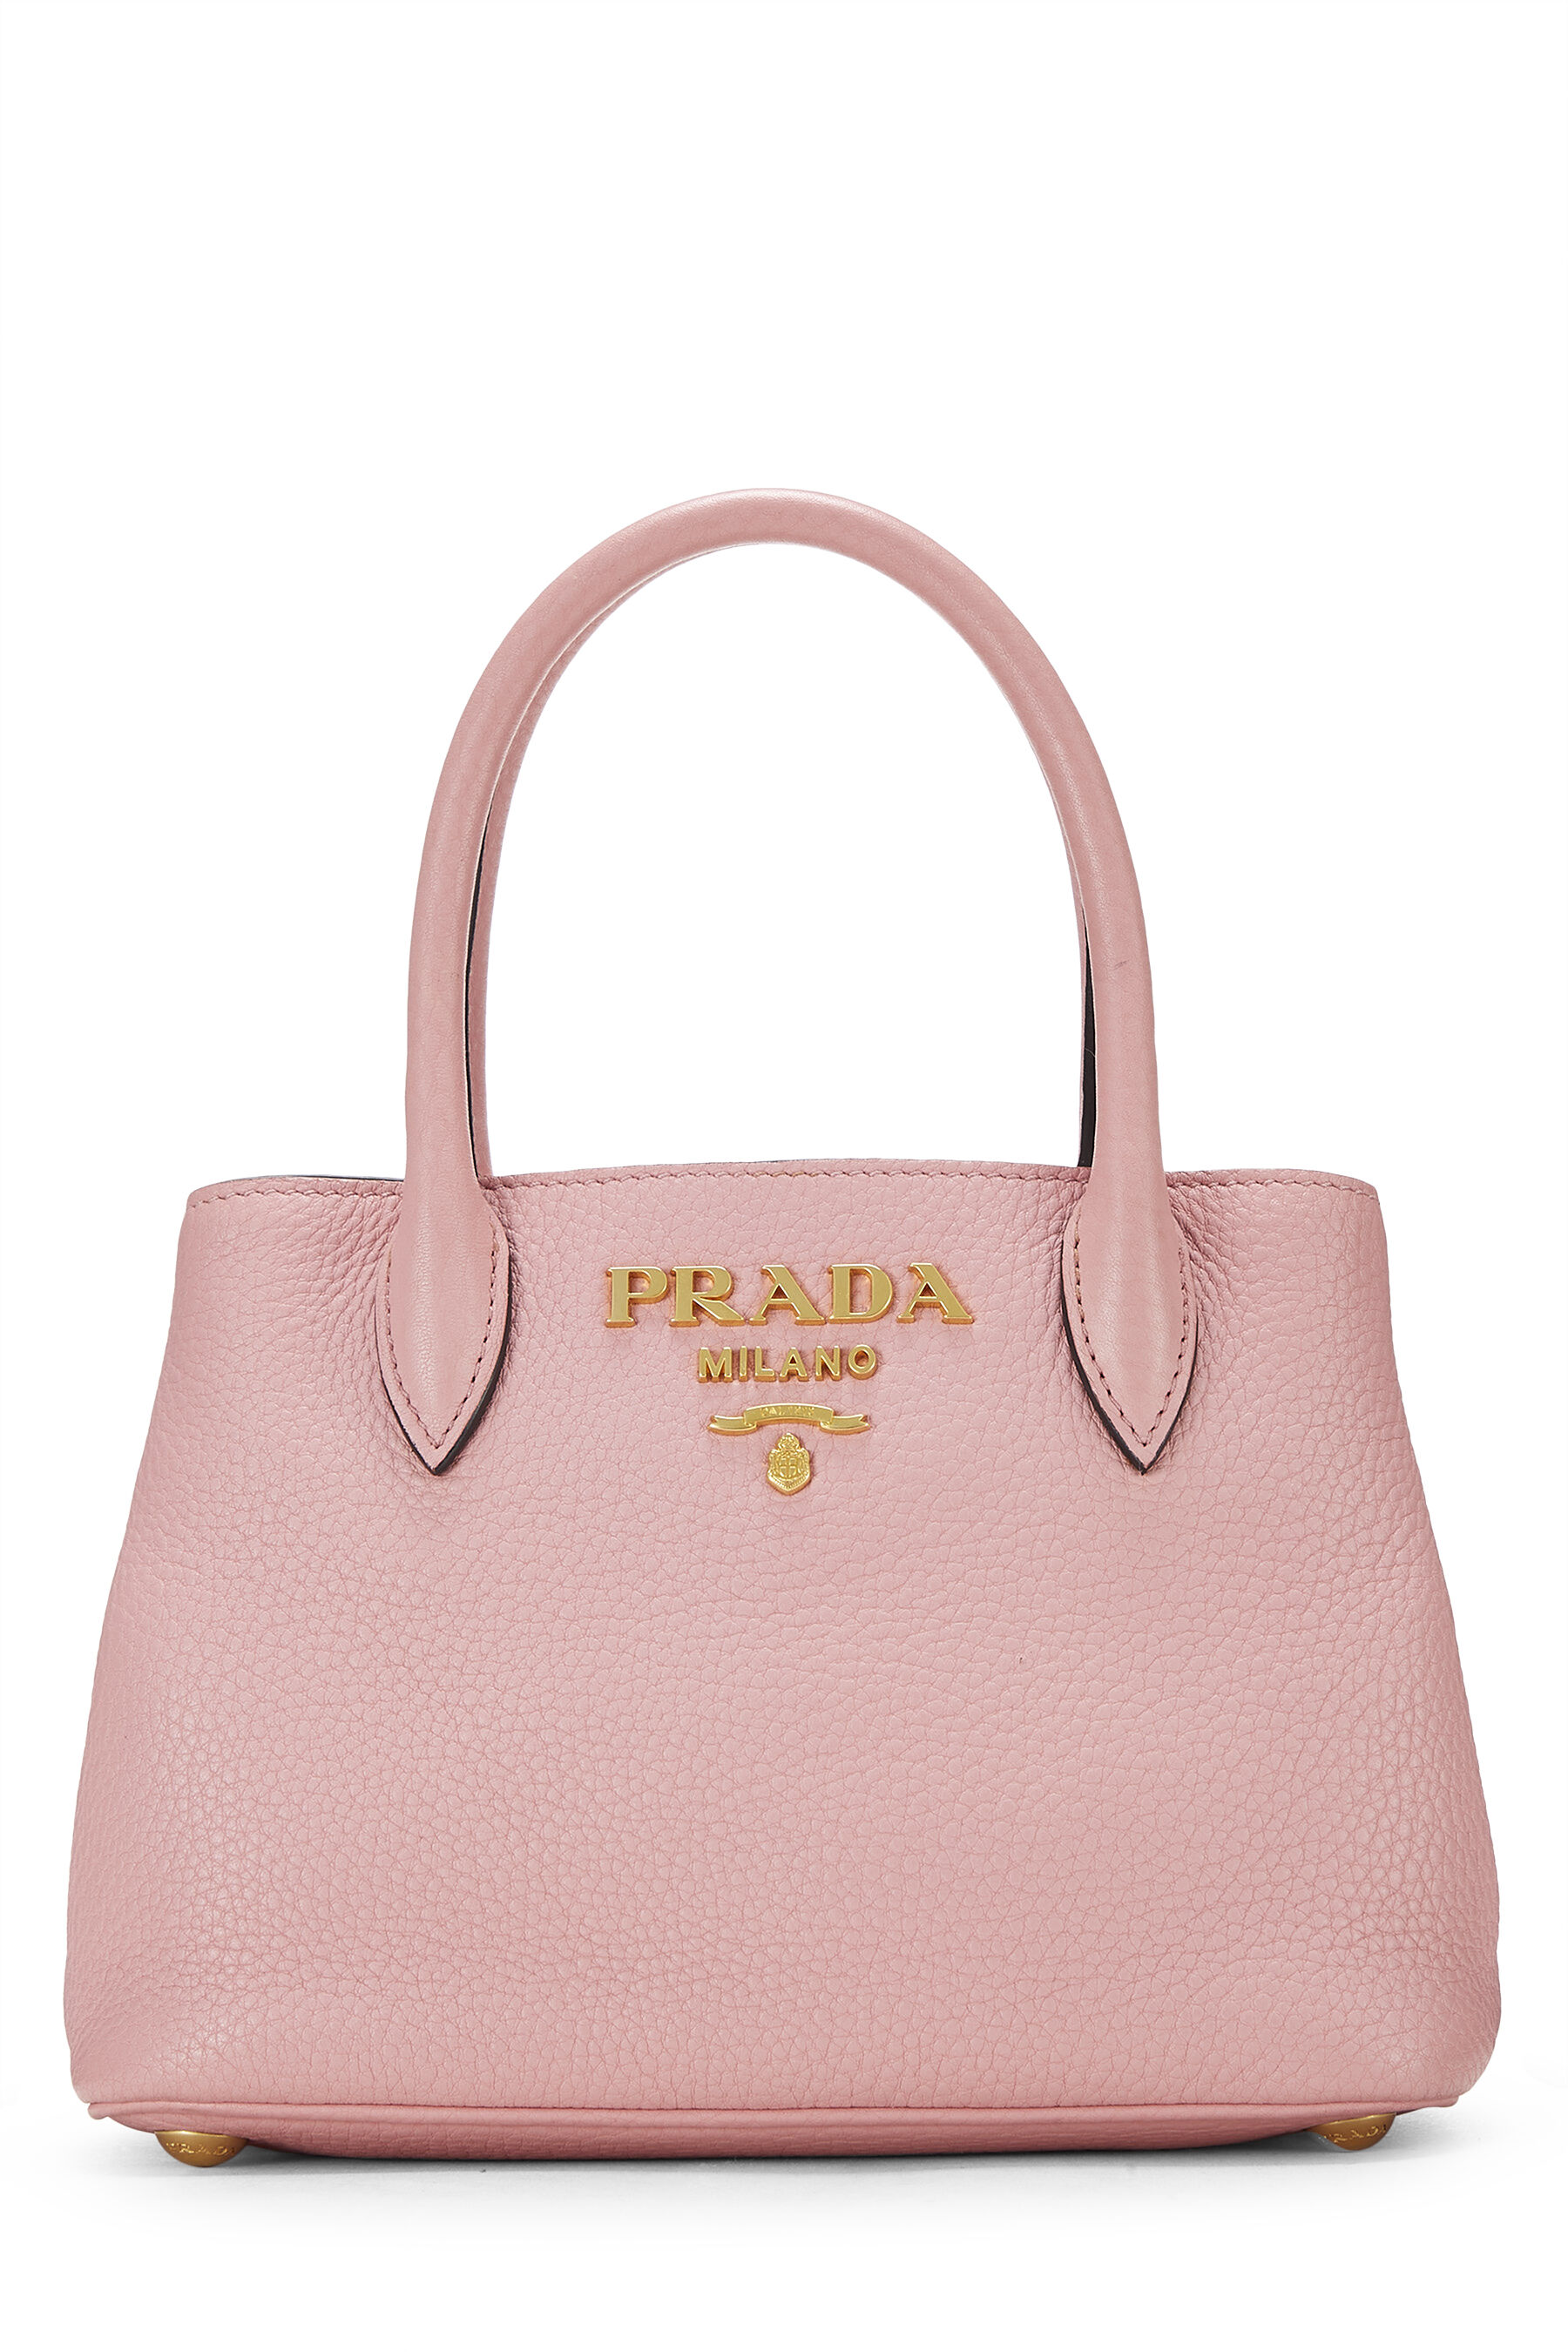 pink prada shoulder bag